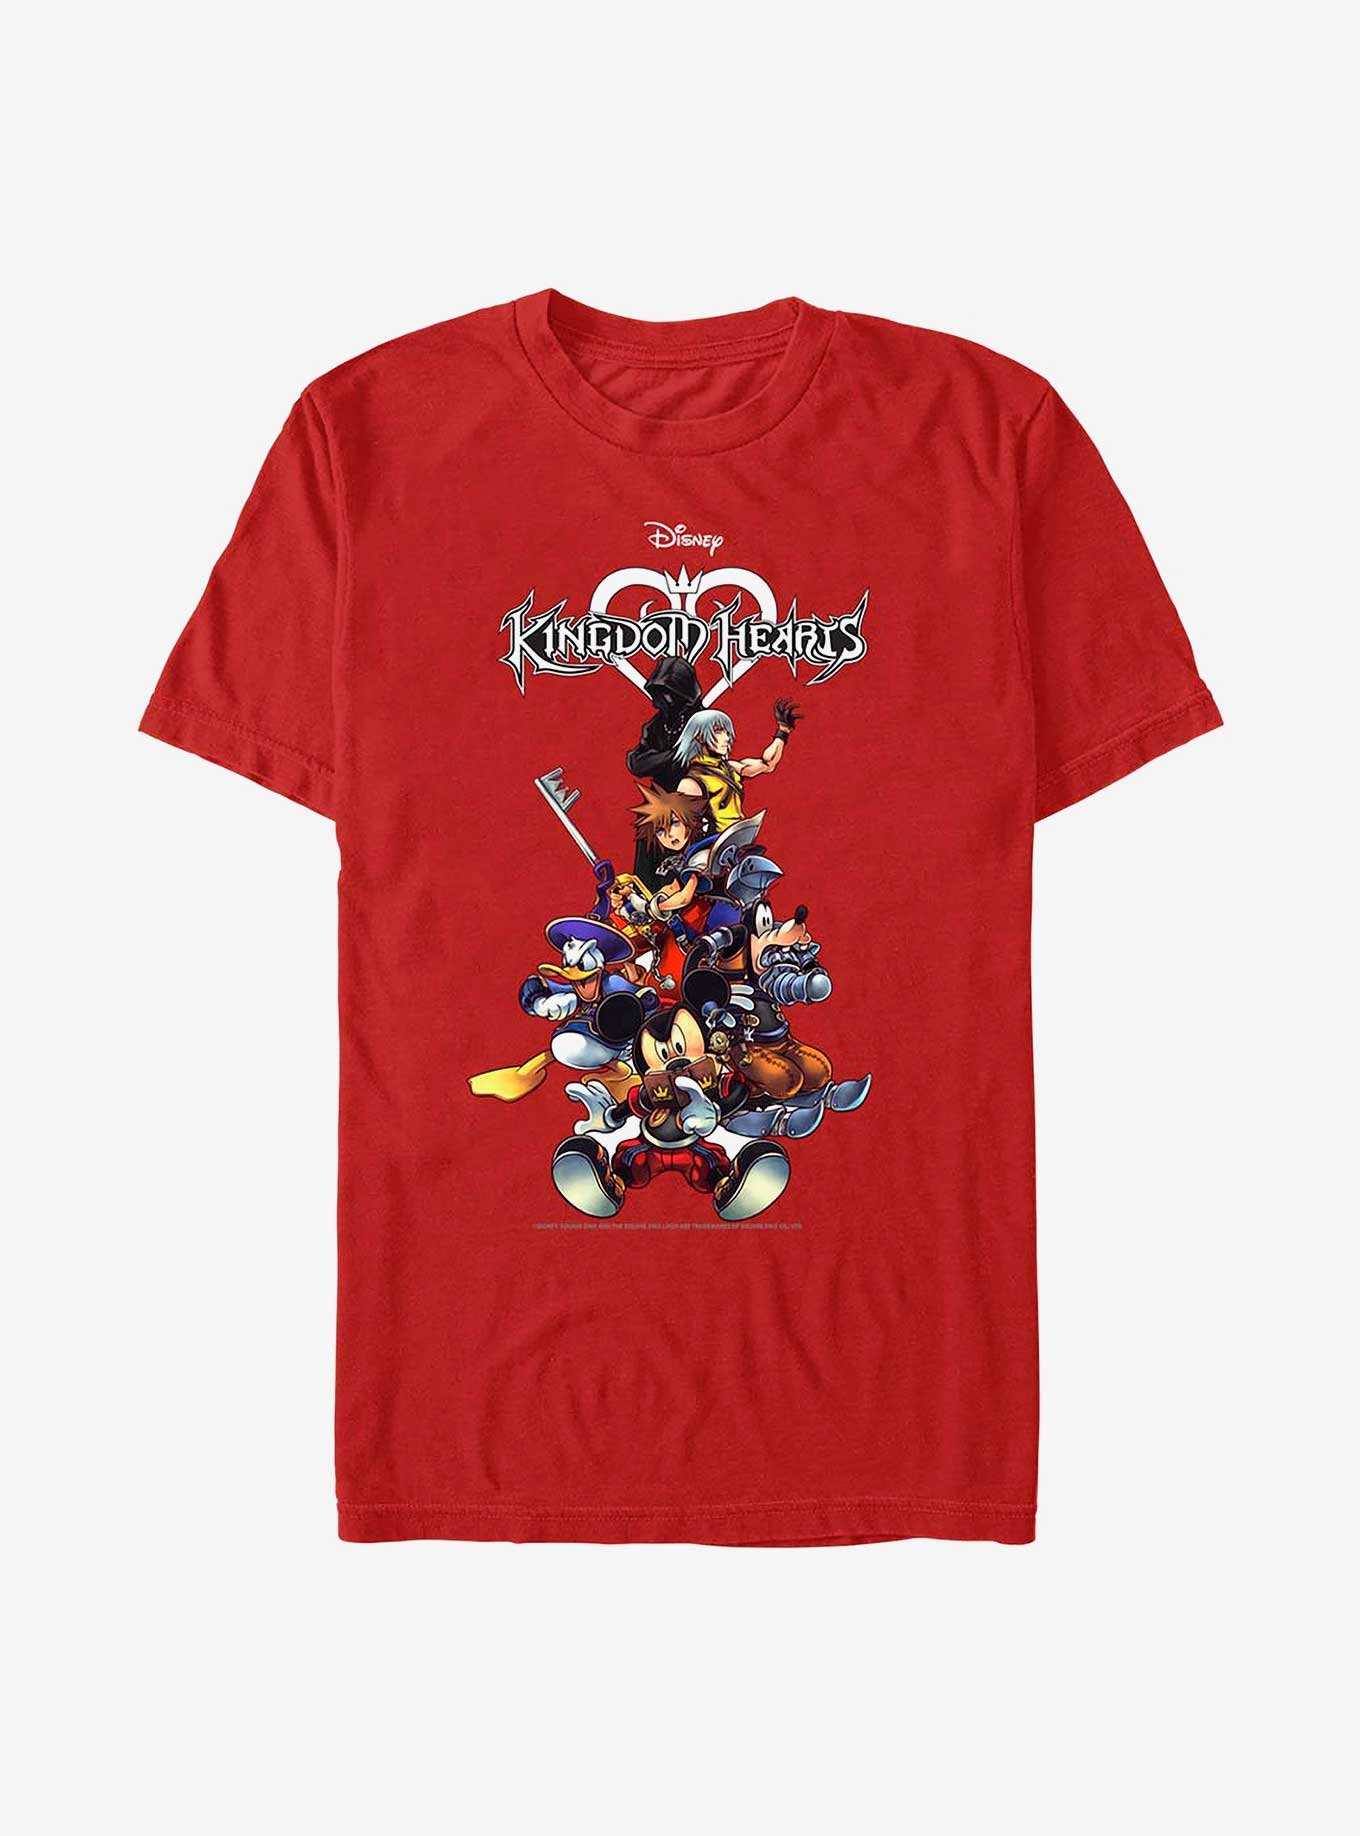 Disney Kingdom Hearts Group With Logo T-Shirt, , hi-res